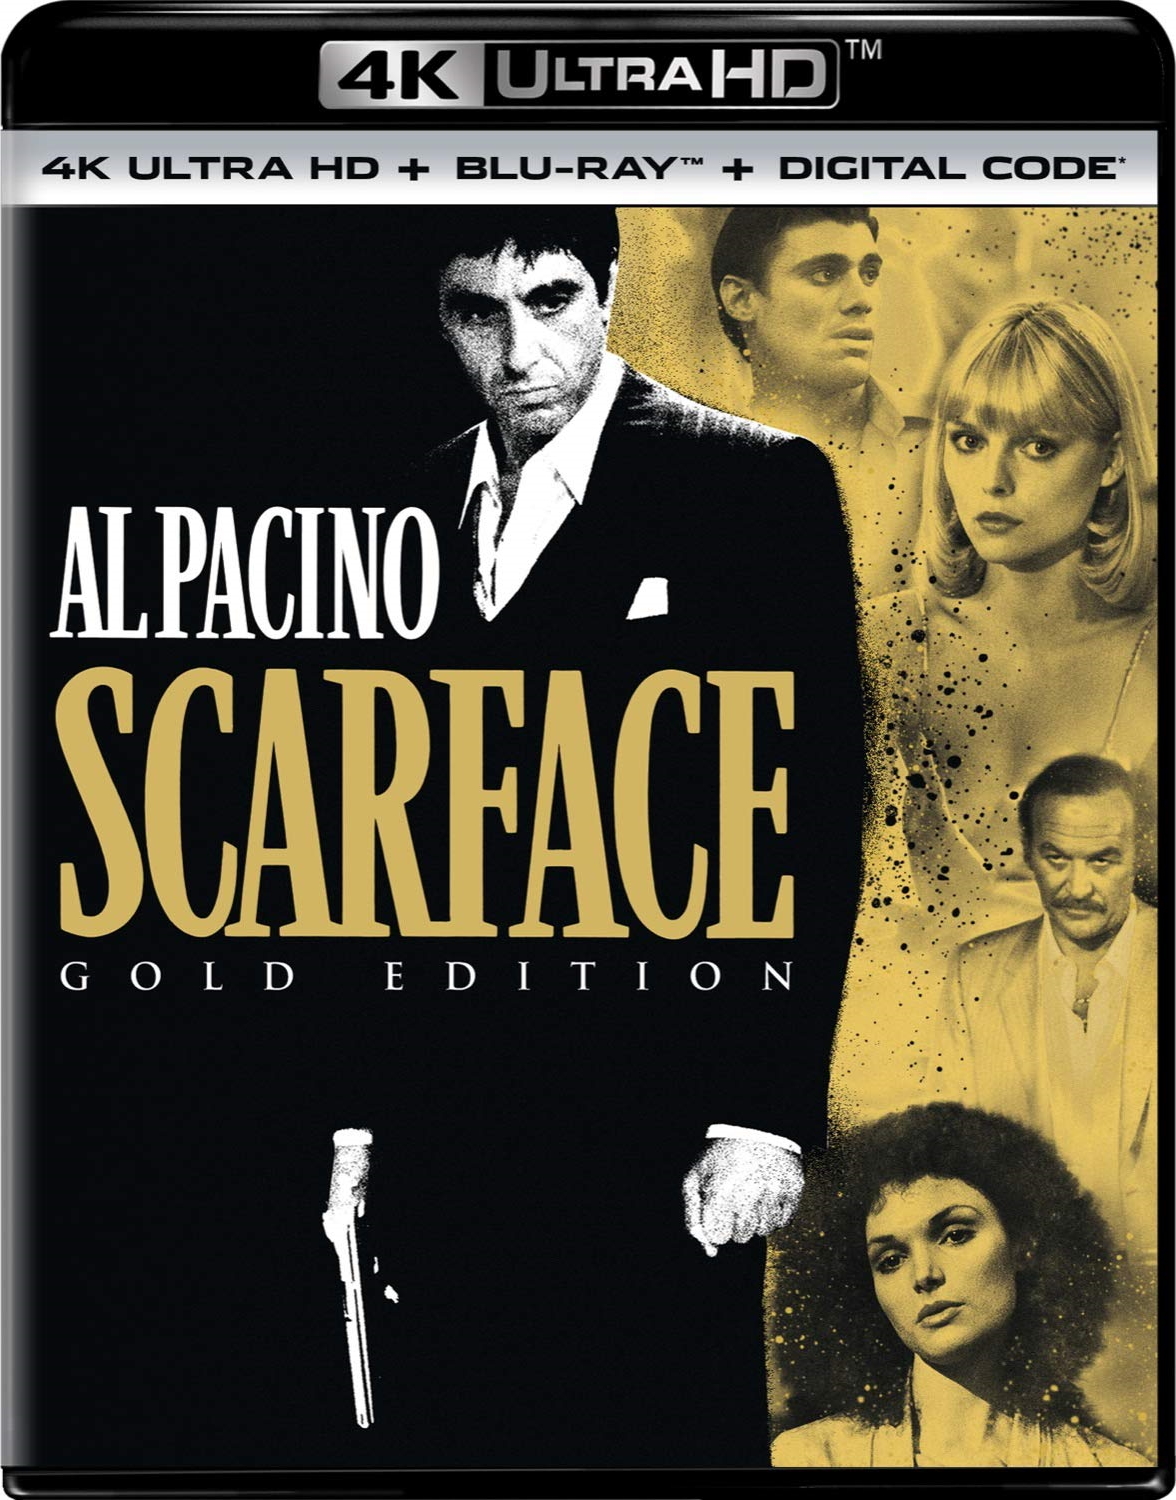 Scarface (1983) Caracortada (1983) [DTS 2.0 + SUP] [4K UHD Blu Ray-Rip] 246946_front